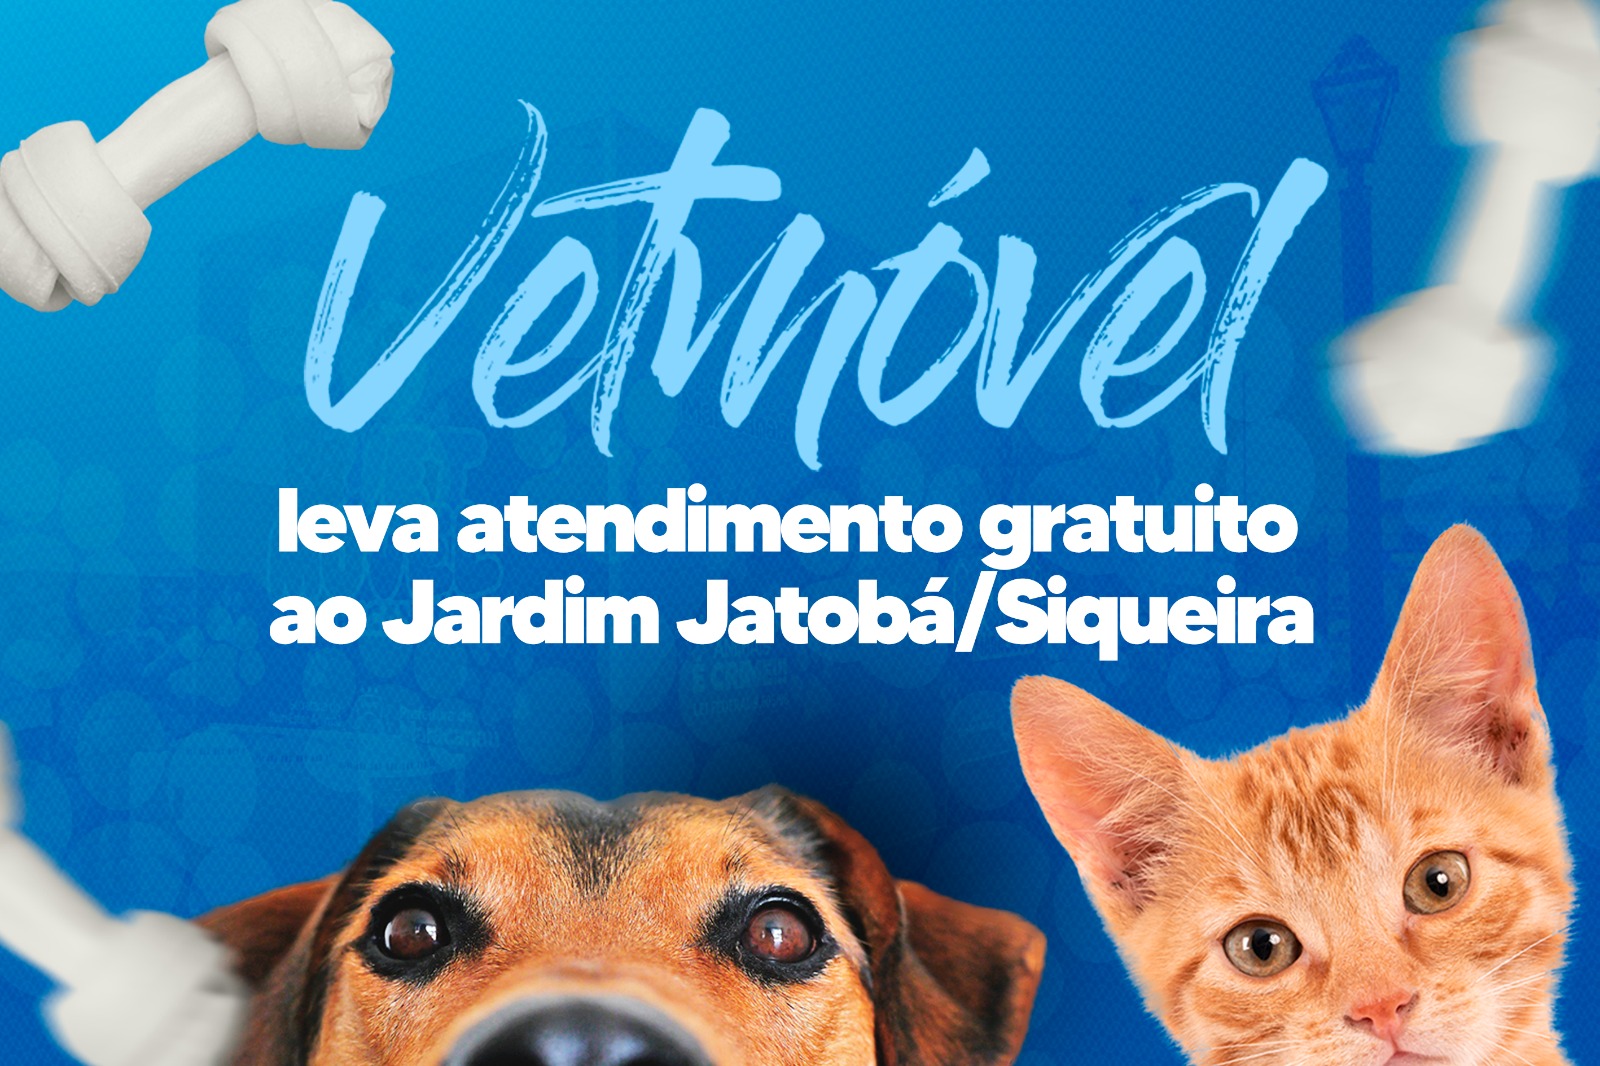 Você está visualizando atualmente VetMóvel leva atendimento veterinário gratuito ao Jardim Jatobá